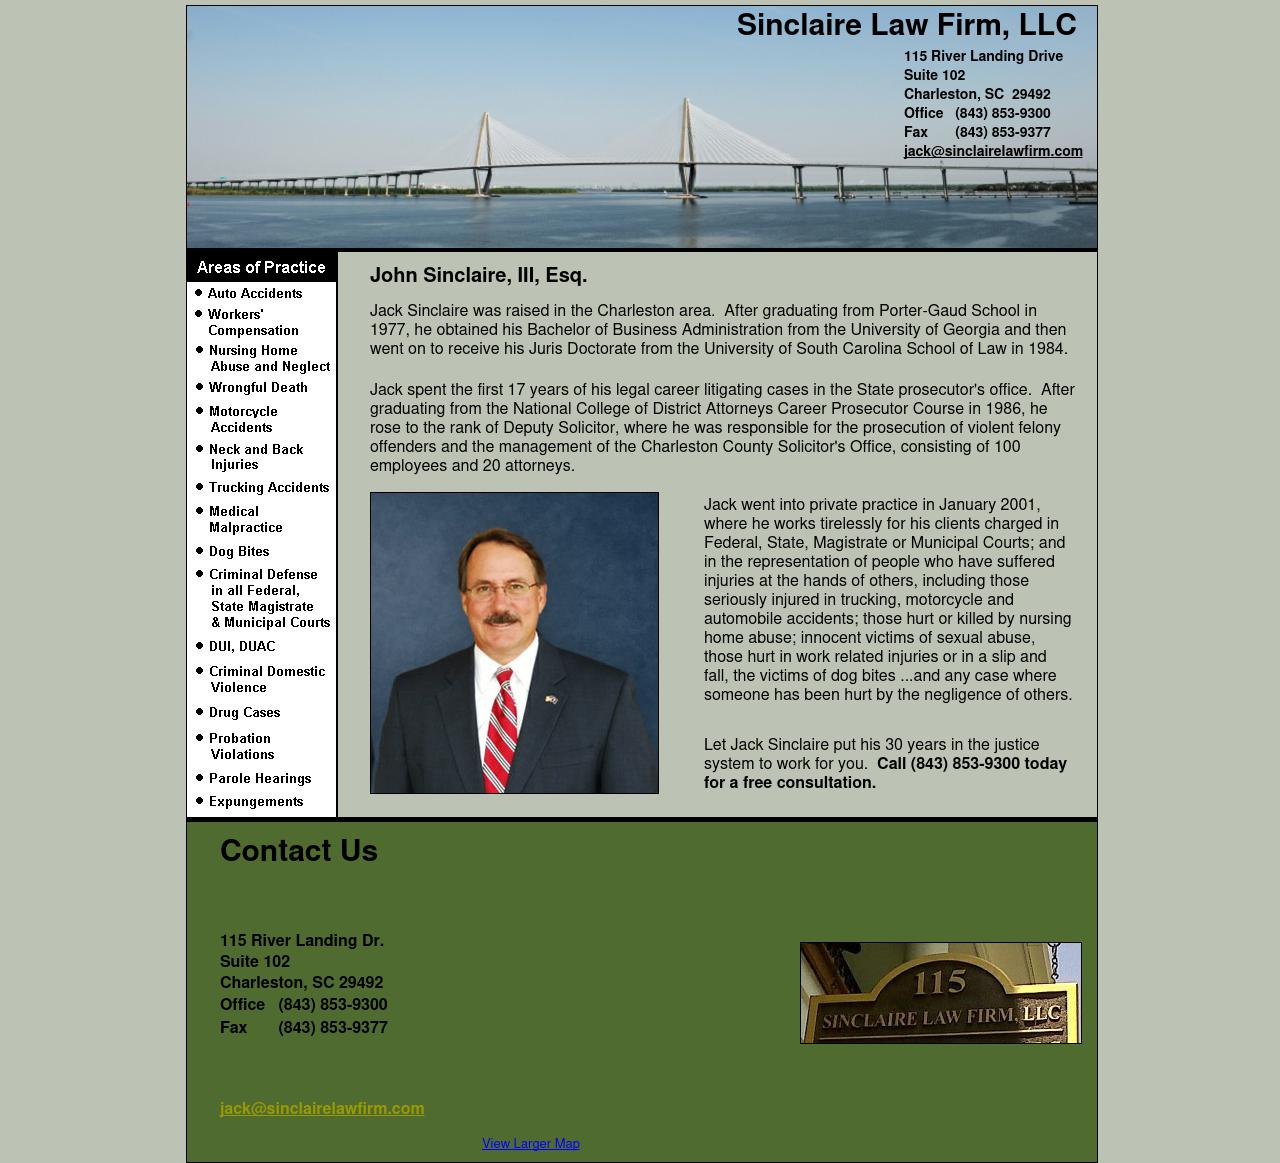 Sinclaire Law Firm LLC - Daniel Island SC Lawyers